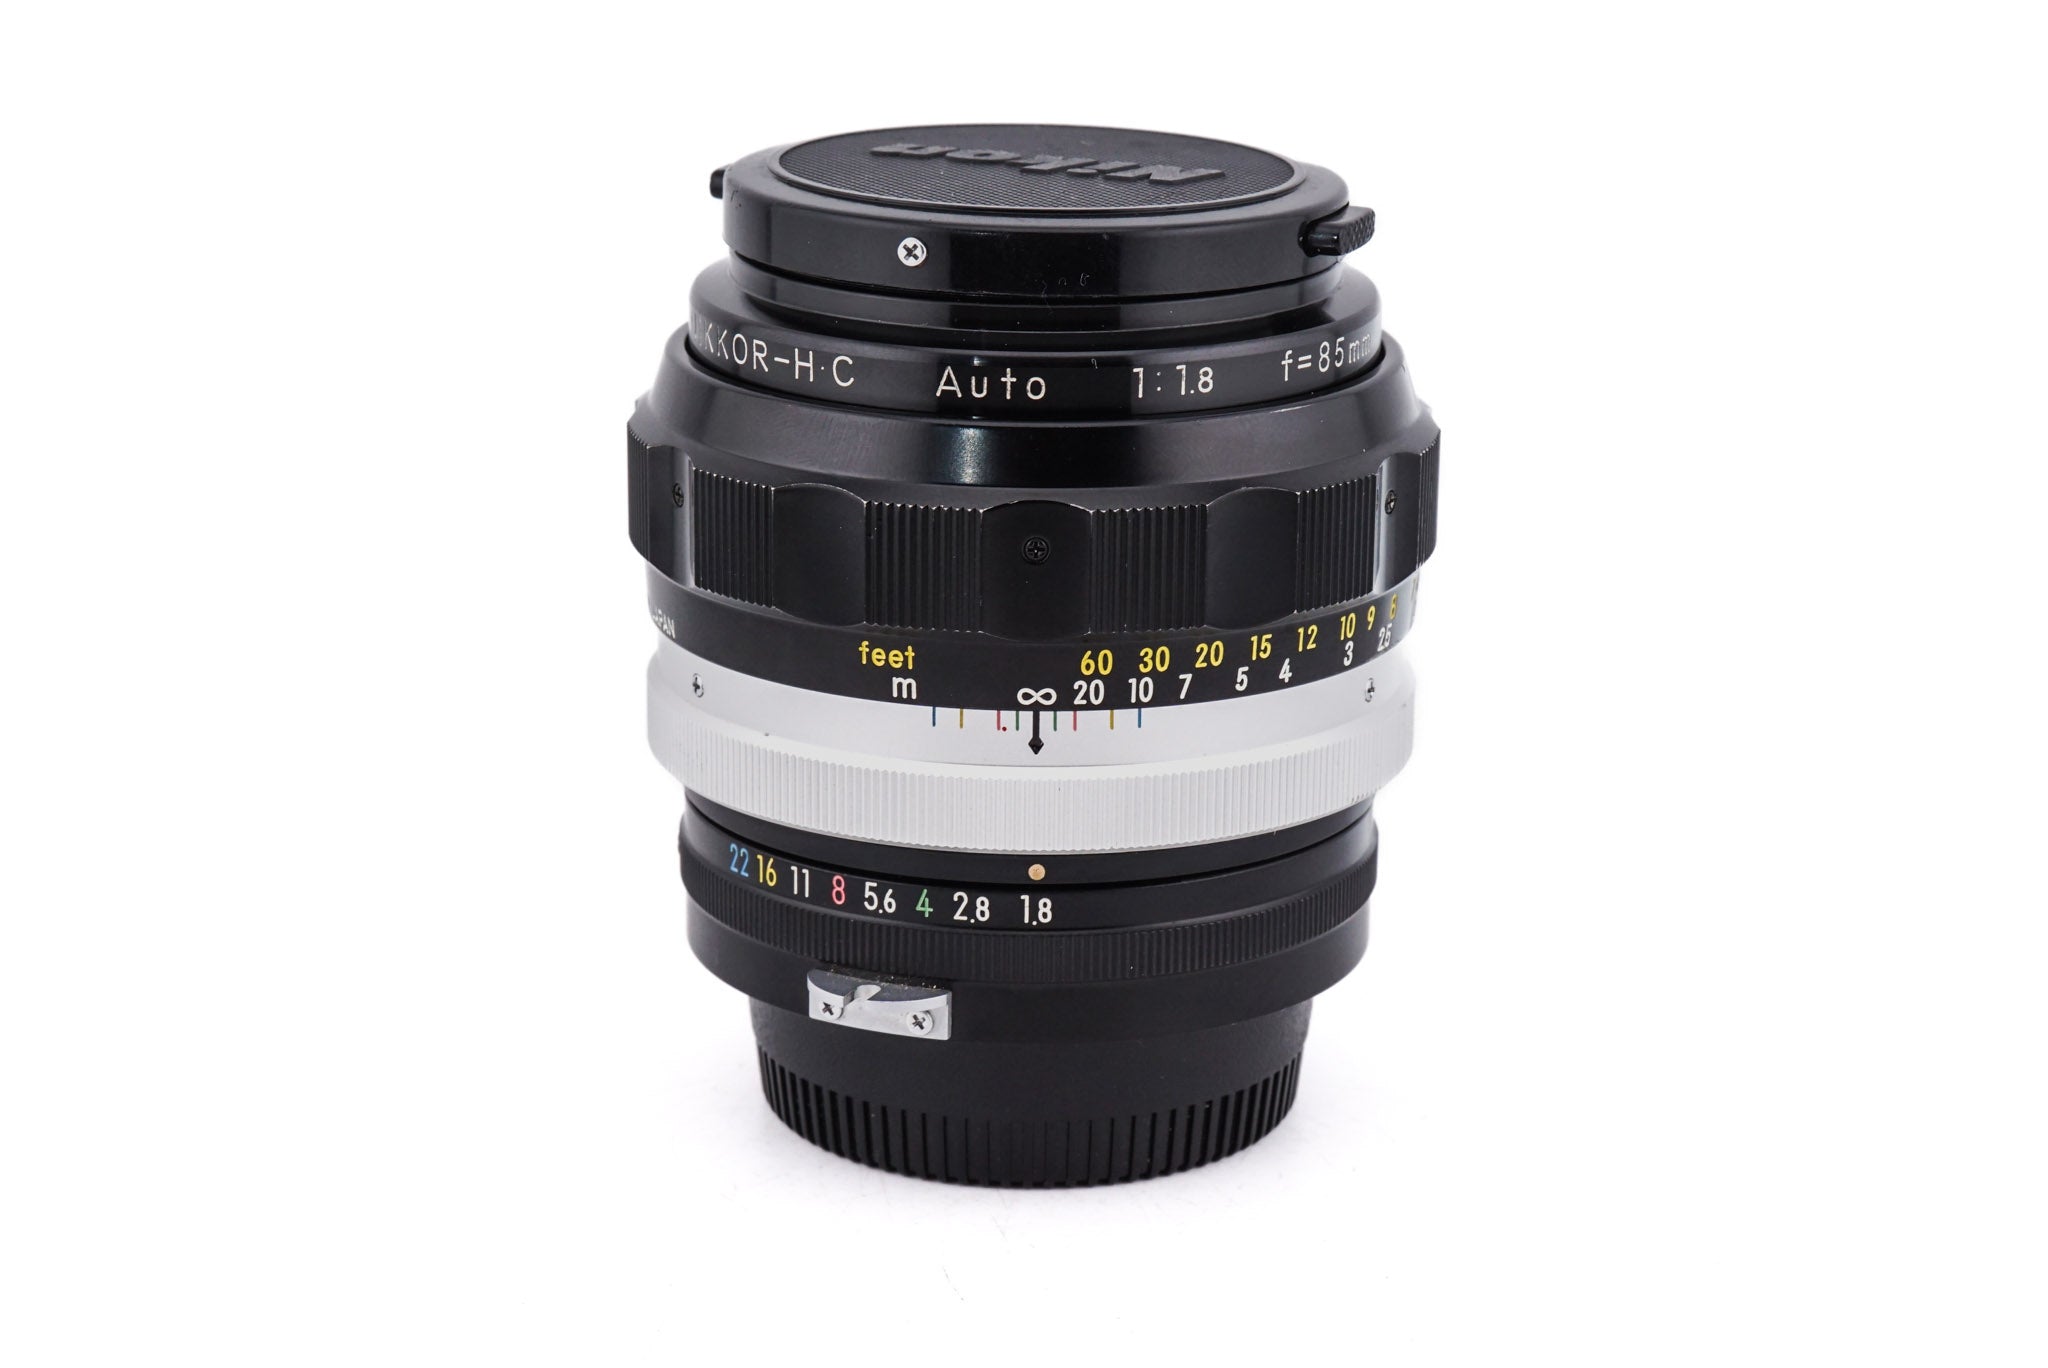 Nikon 85mm f1.8 Nikkor-H.C Auto Pre-AI - Lens